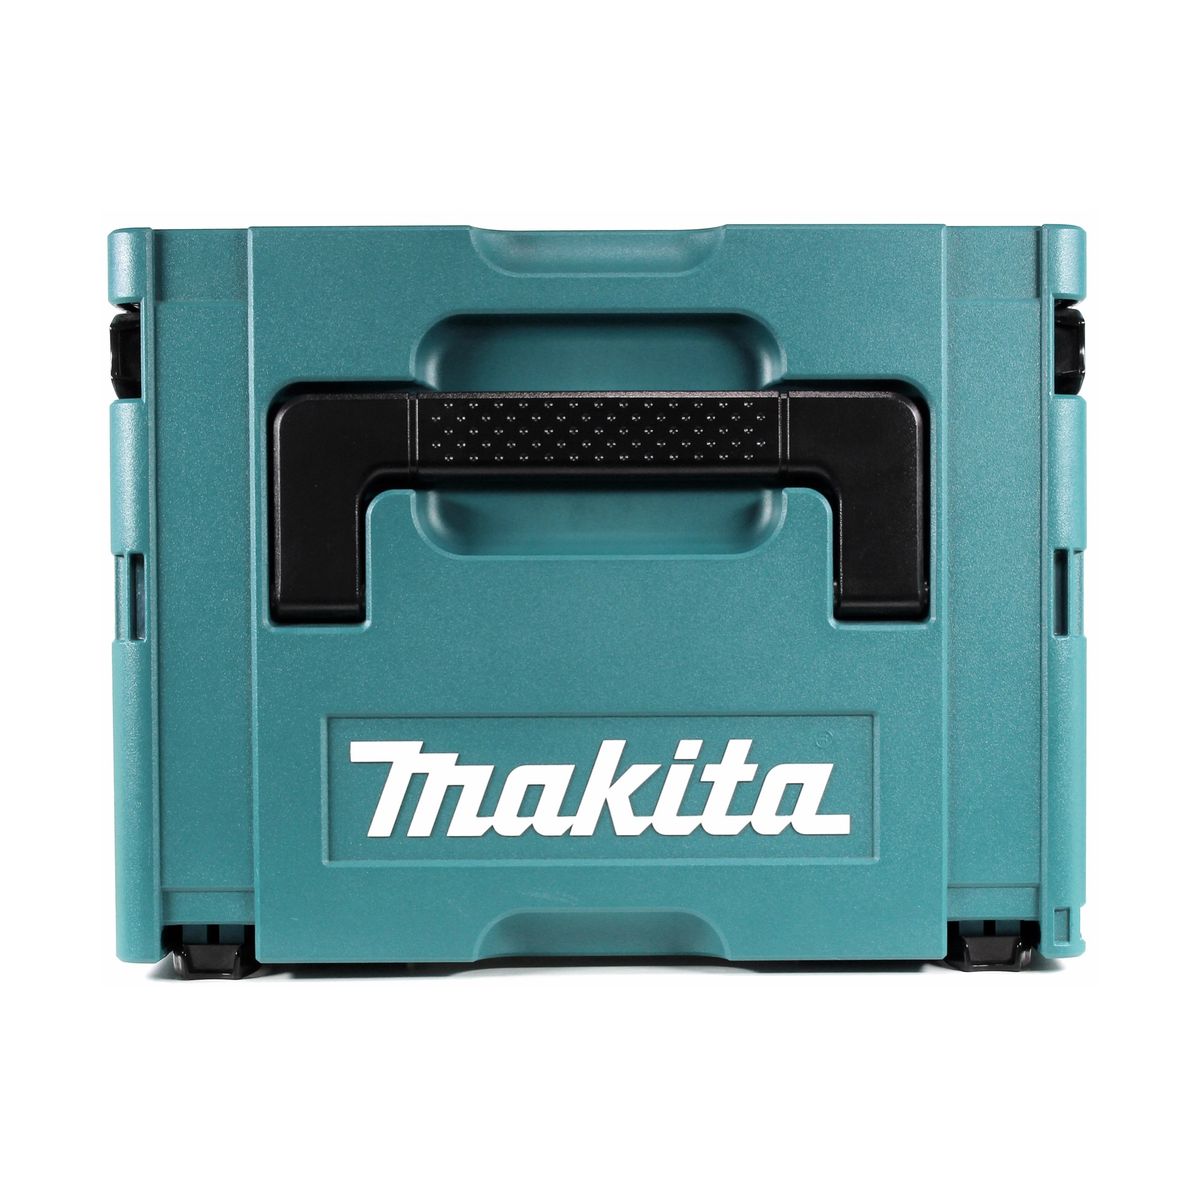 Makita DDF 451 G1J Akku Bohrschrauber 18 V 80 Nm + 1x Akku 6,0 Ah + Makpac - ohne Ladegerät - Toolbrothers